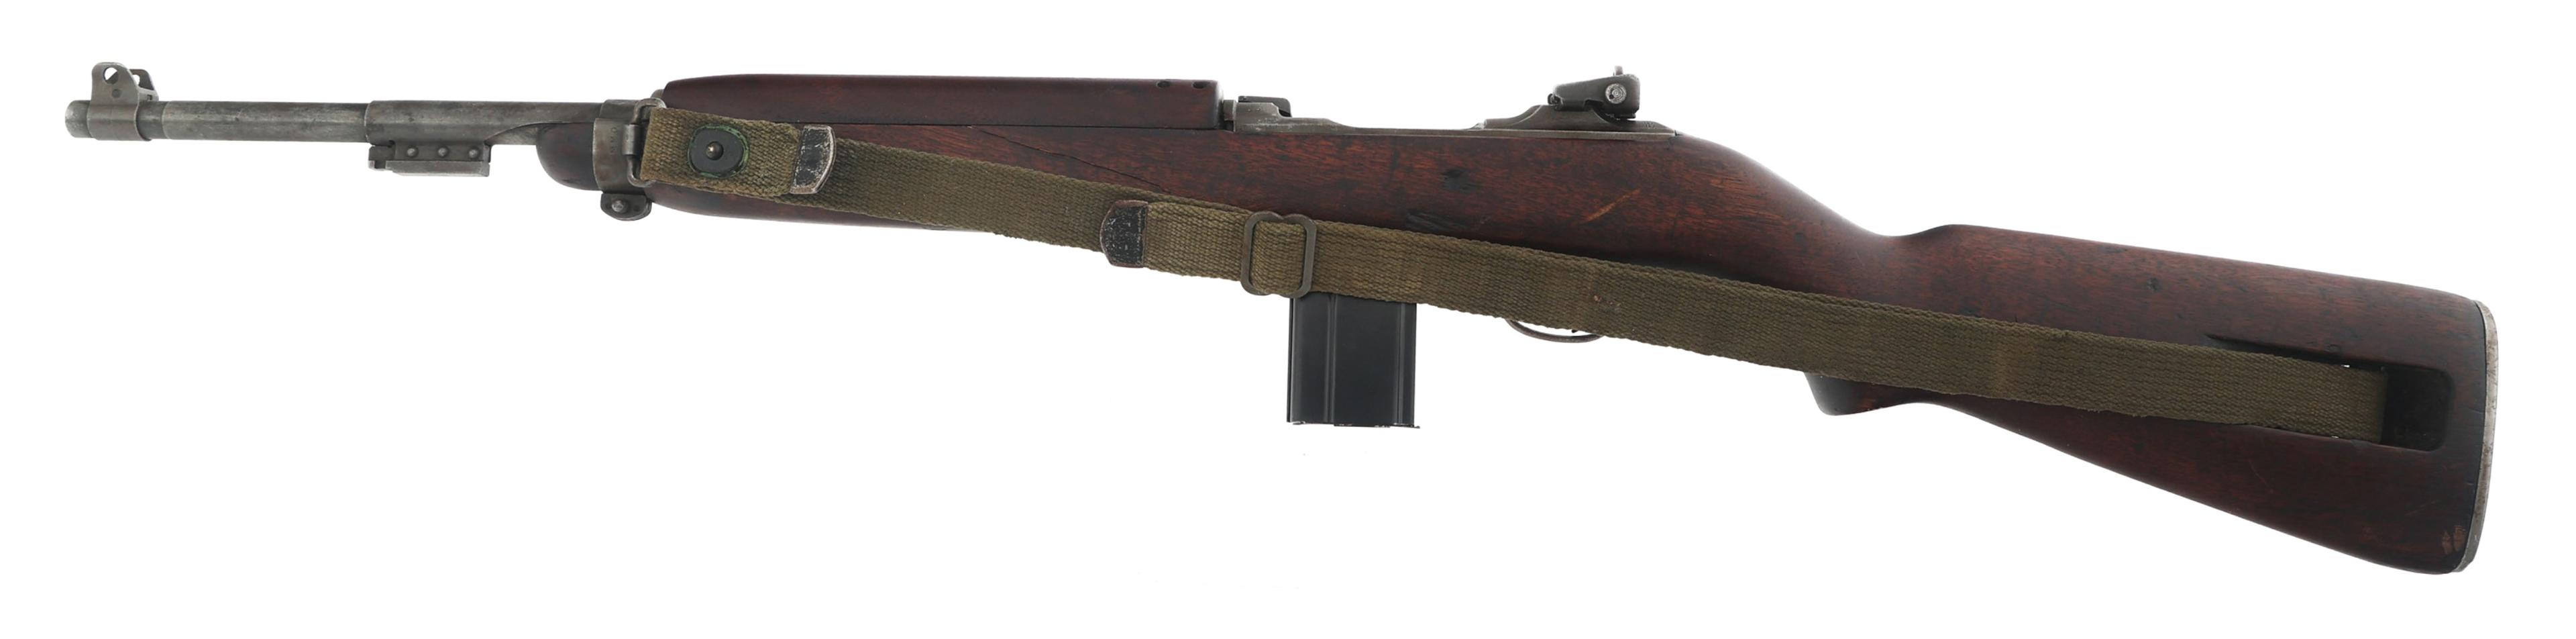 WWII US WINCHESTER MODEL M1 .30 CALIBER CARBINE